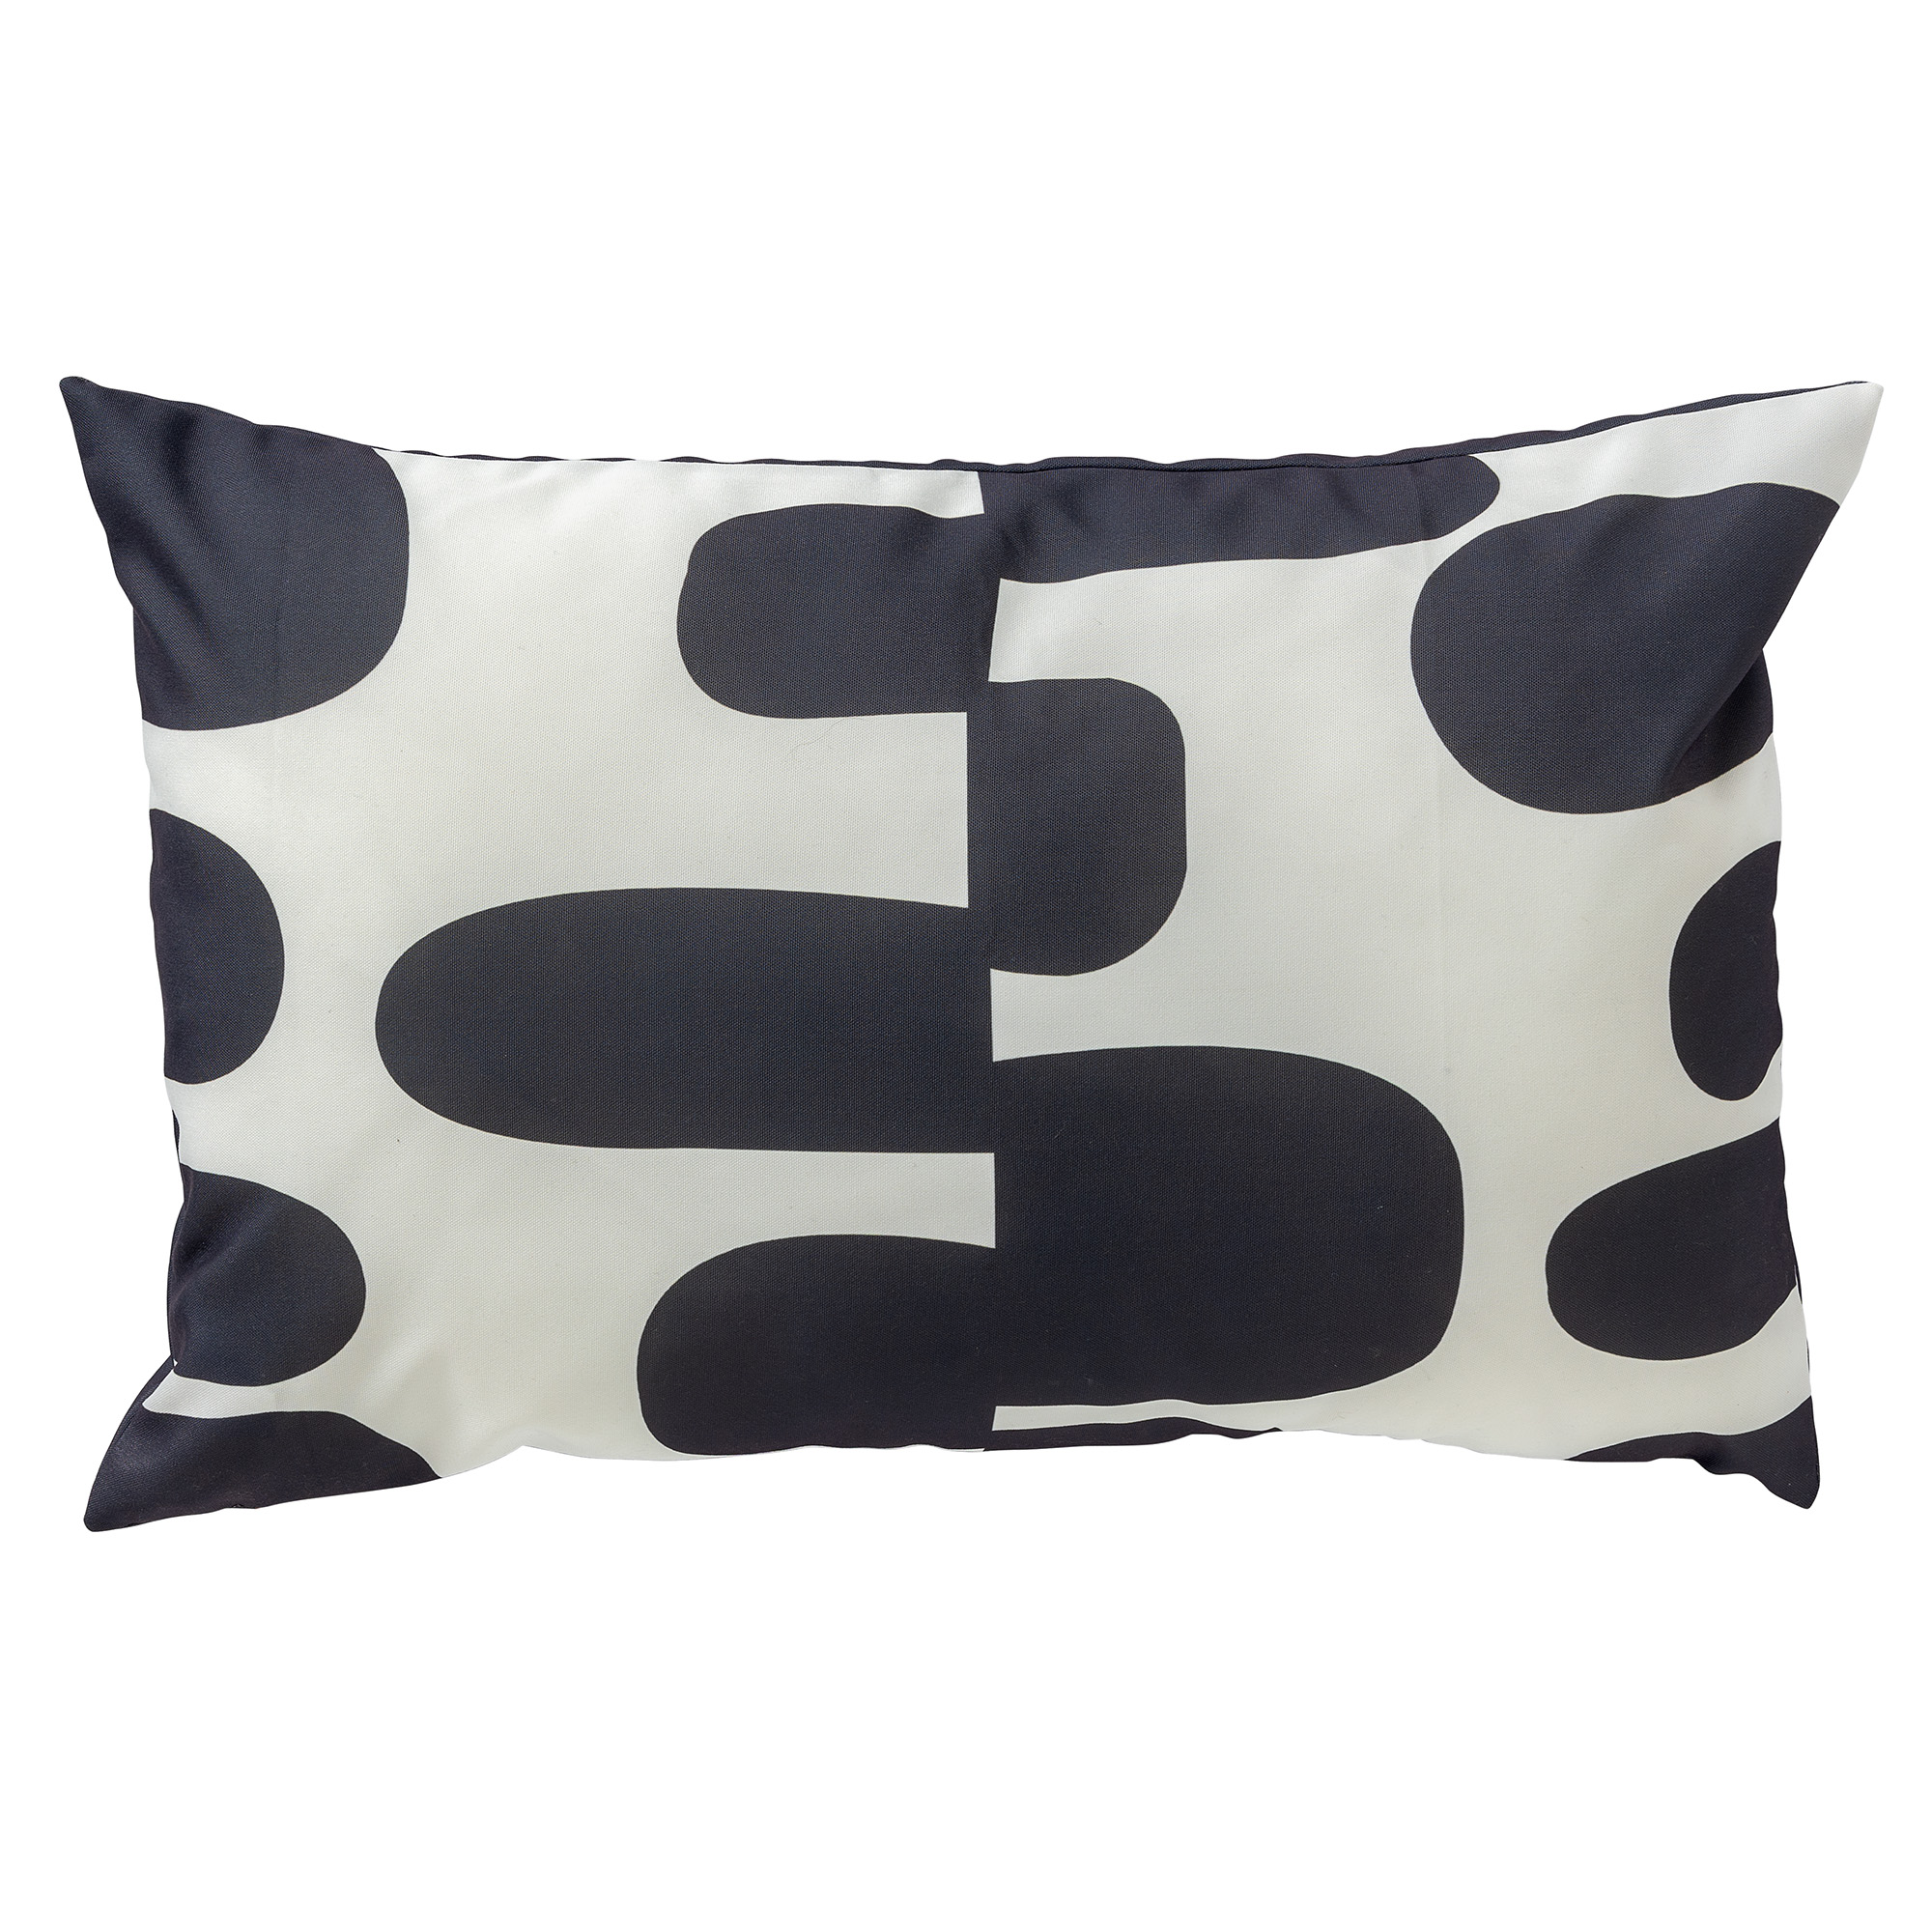 RIVANO - Outdoor Cushion Cover 40x60 cm Charcoal Grey - grey